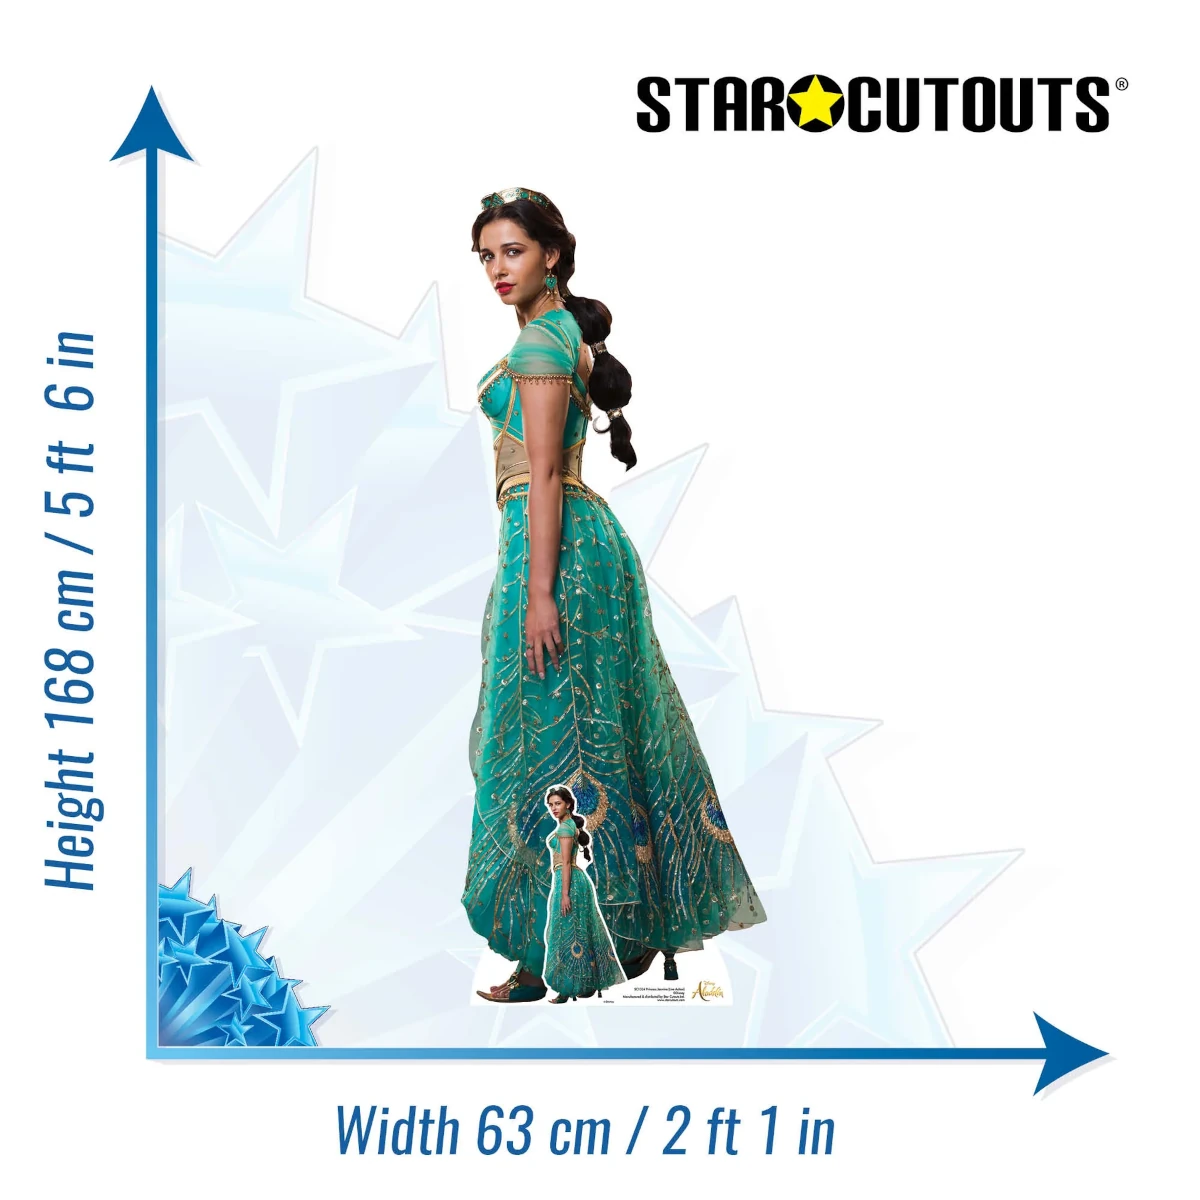 SC1334 Princess Jasmine (Disney Aladdin Live Action) Official Lifesize + Mini Cardboard Cutout Standee Size